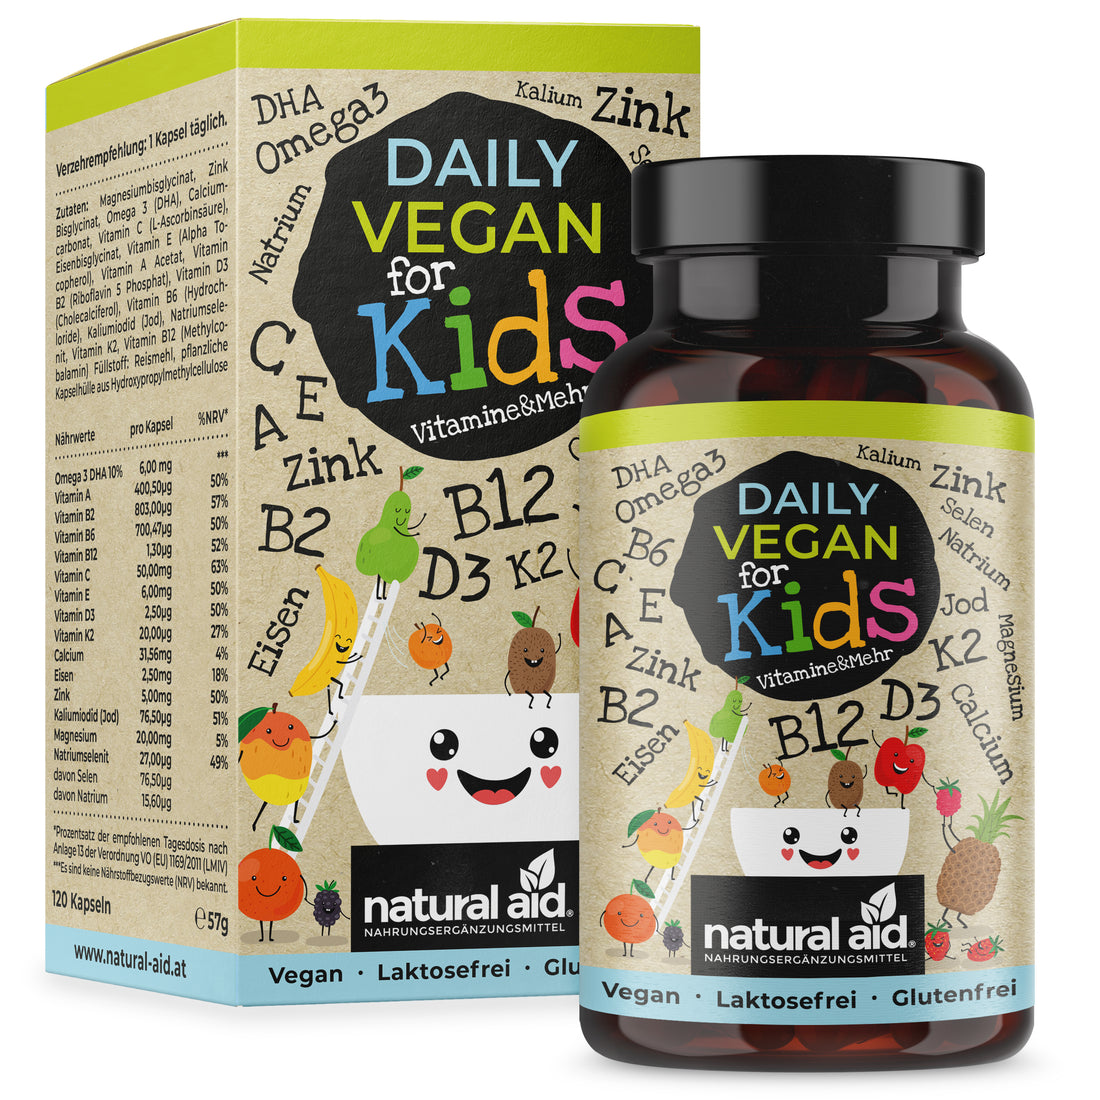 Daily Vegan for Kids